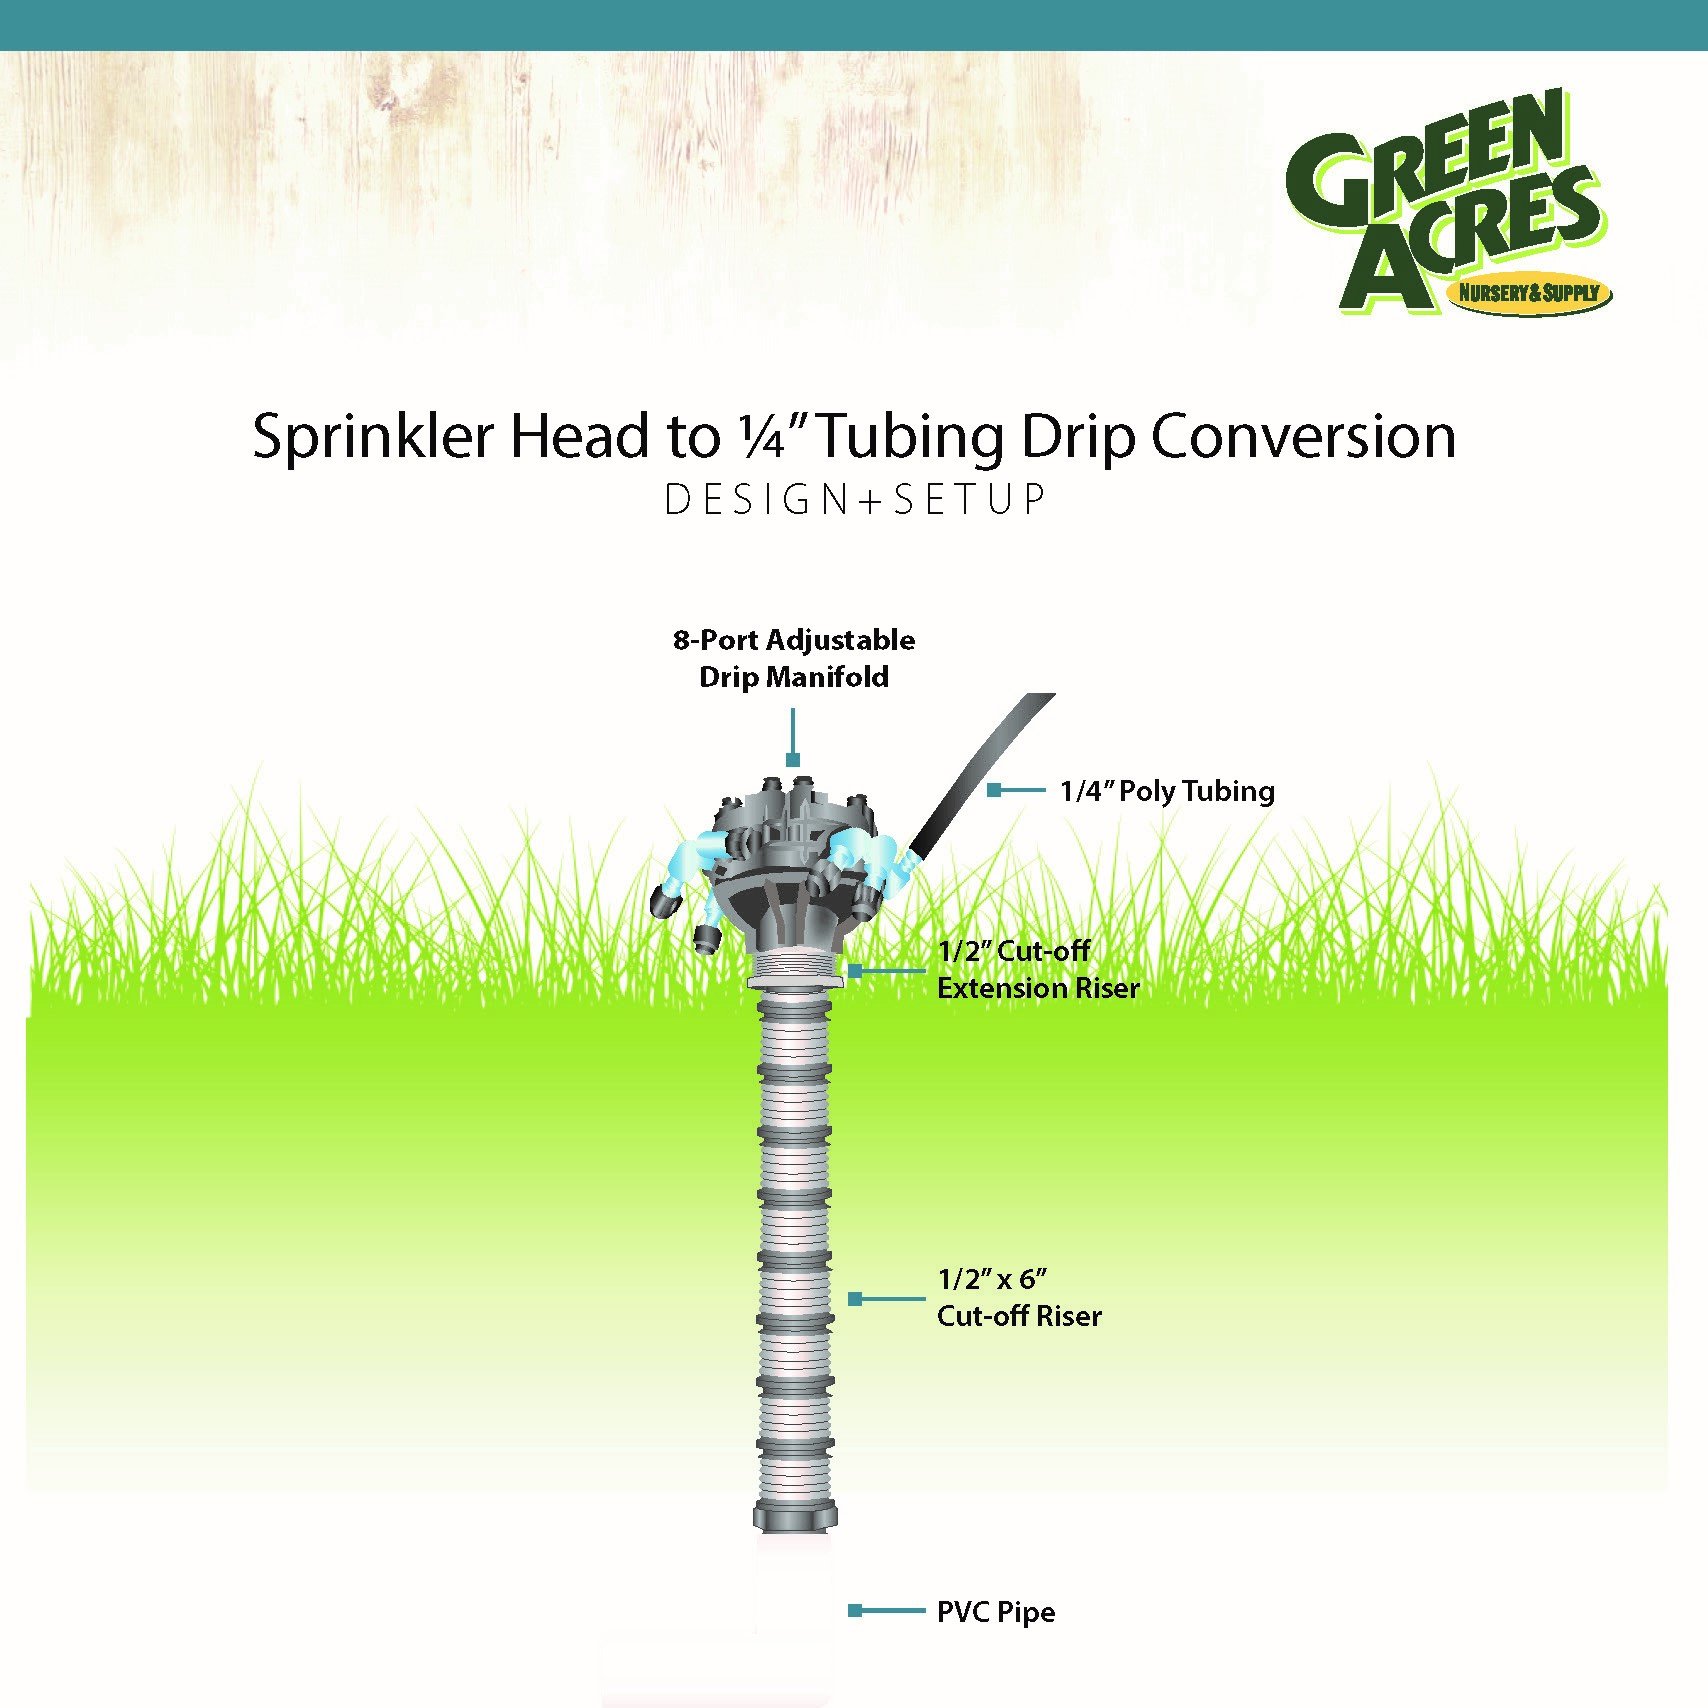 Diagram Sprinkler Head to 1/4" Tubing Drip Conversion